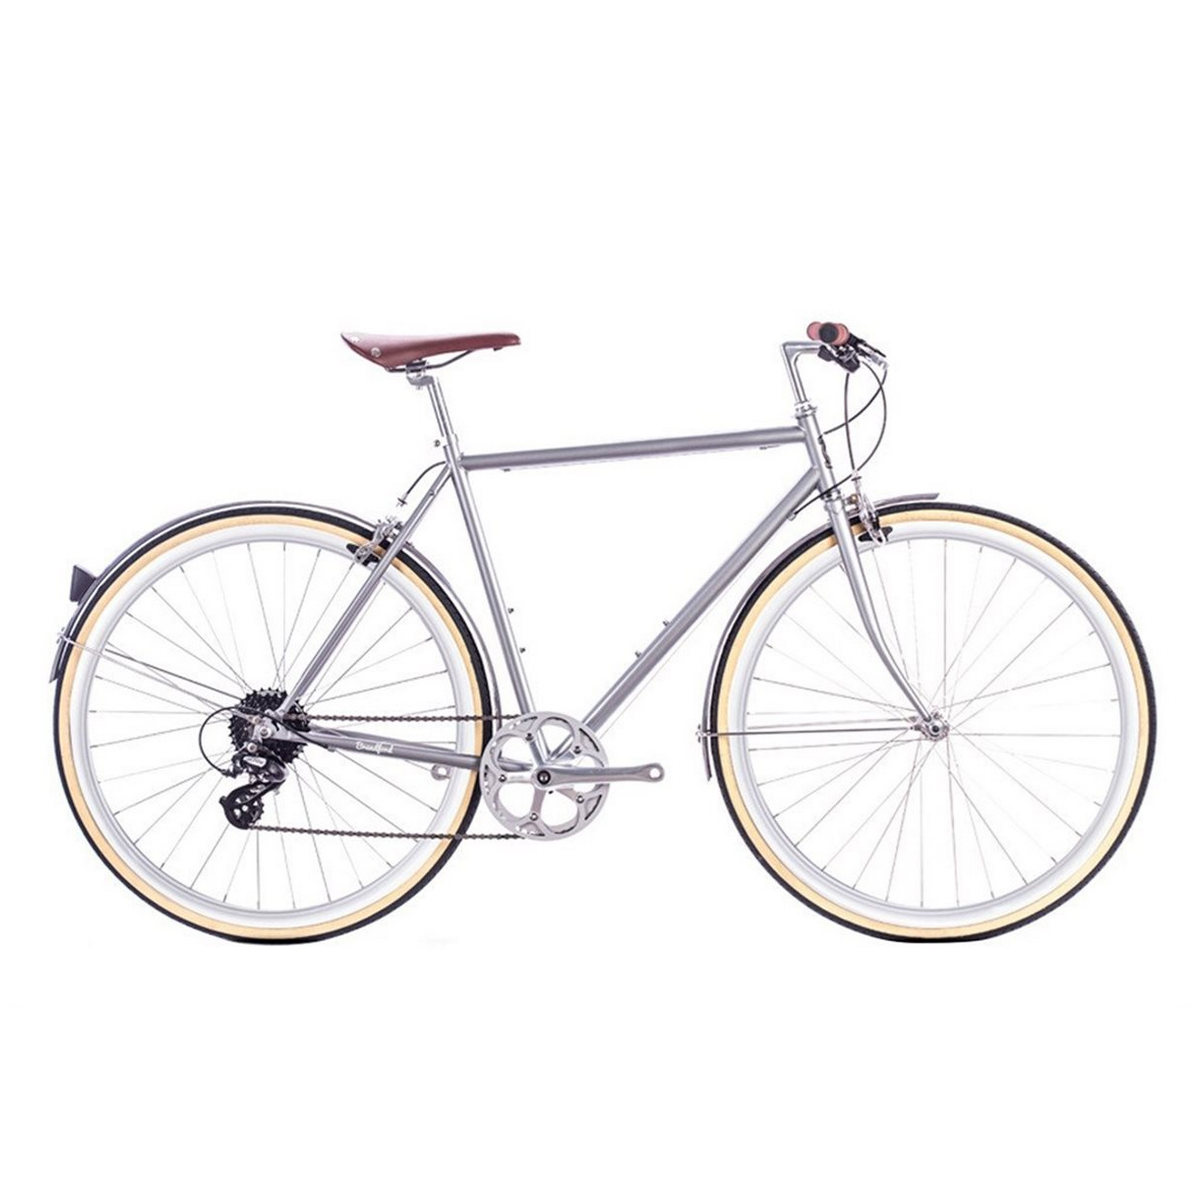 Bicicleta urbana ODYSSEY 8spd Brandford prata grande 58cm